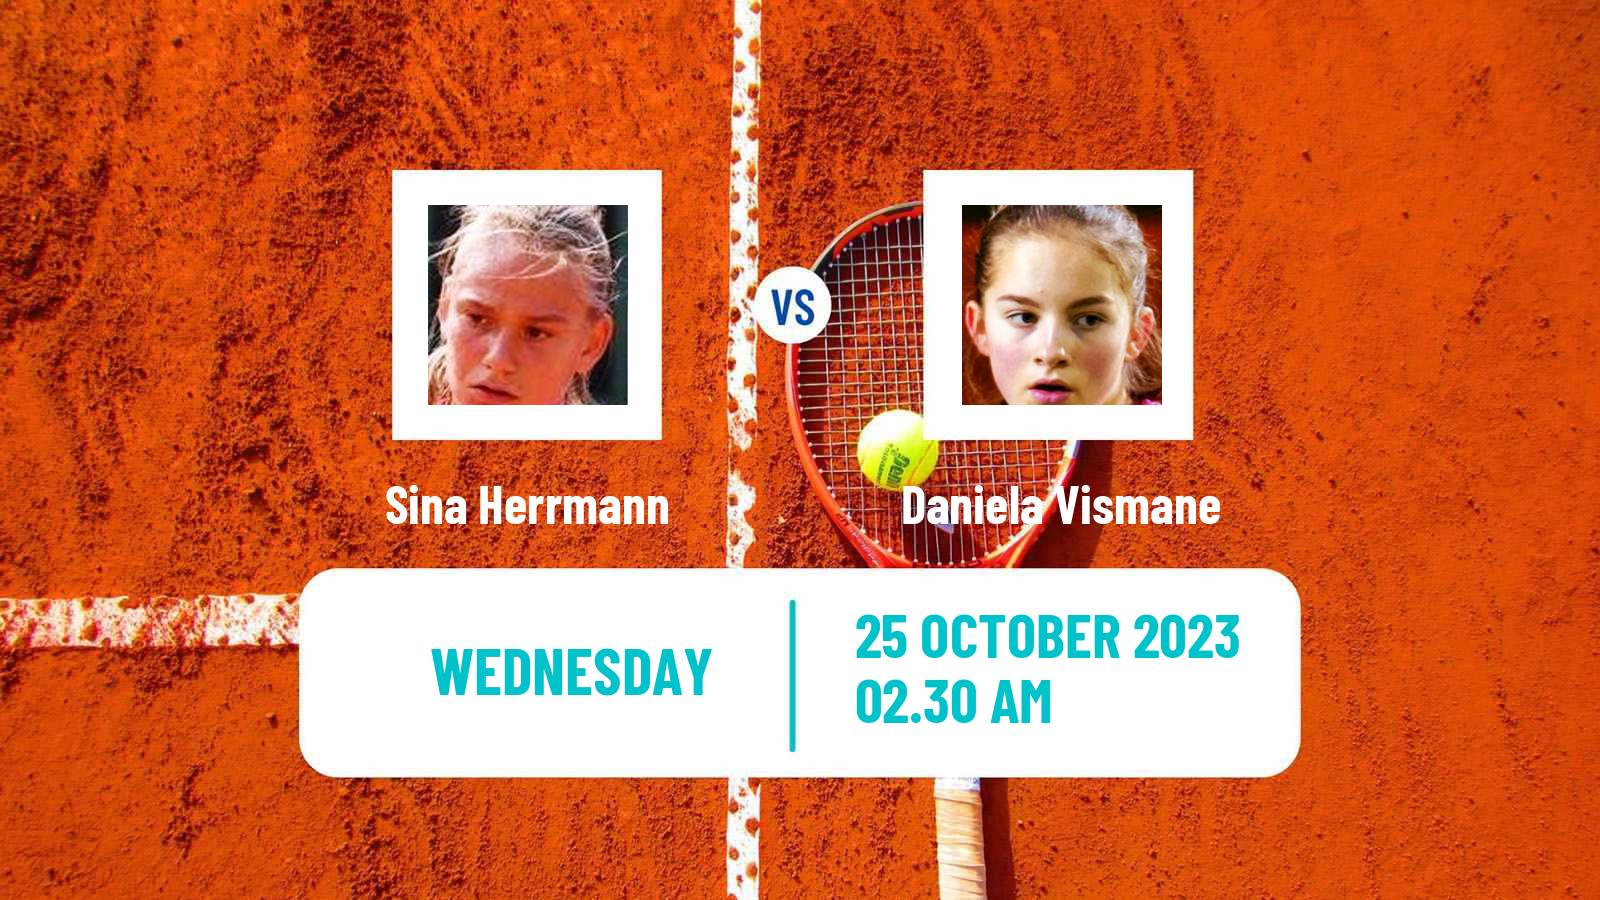 Tennis ITF W25 Heraklion Women Sina Herrmann - Daniela Vismane